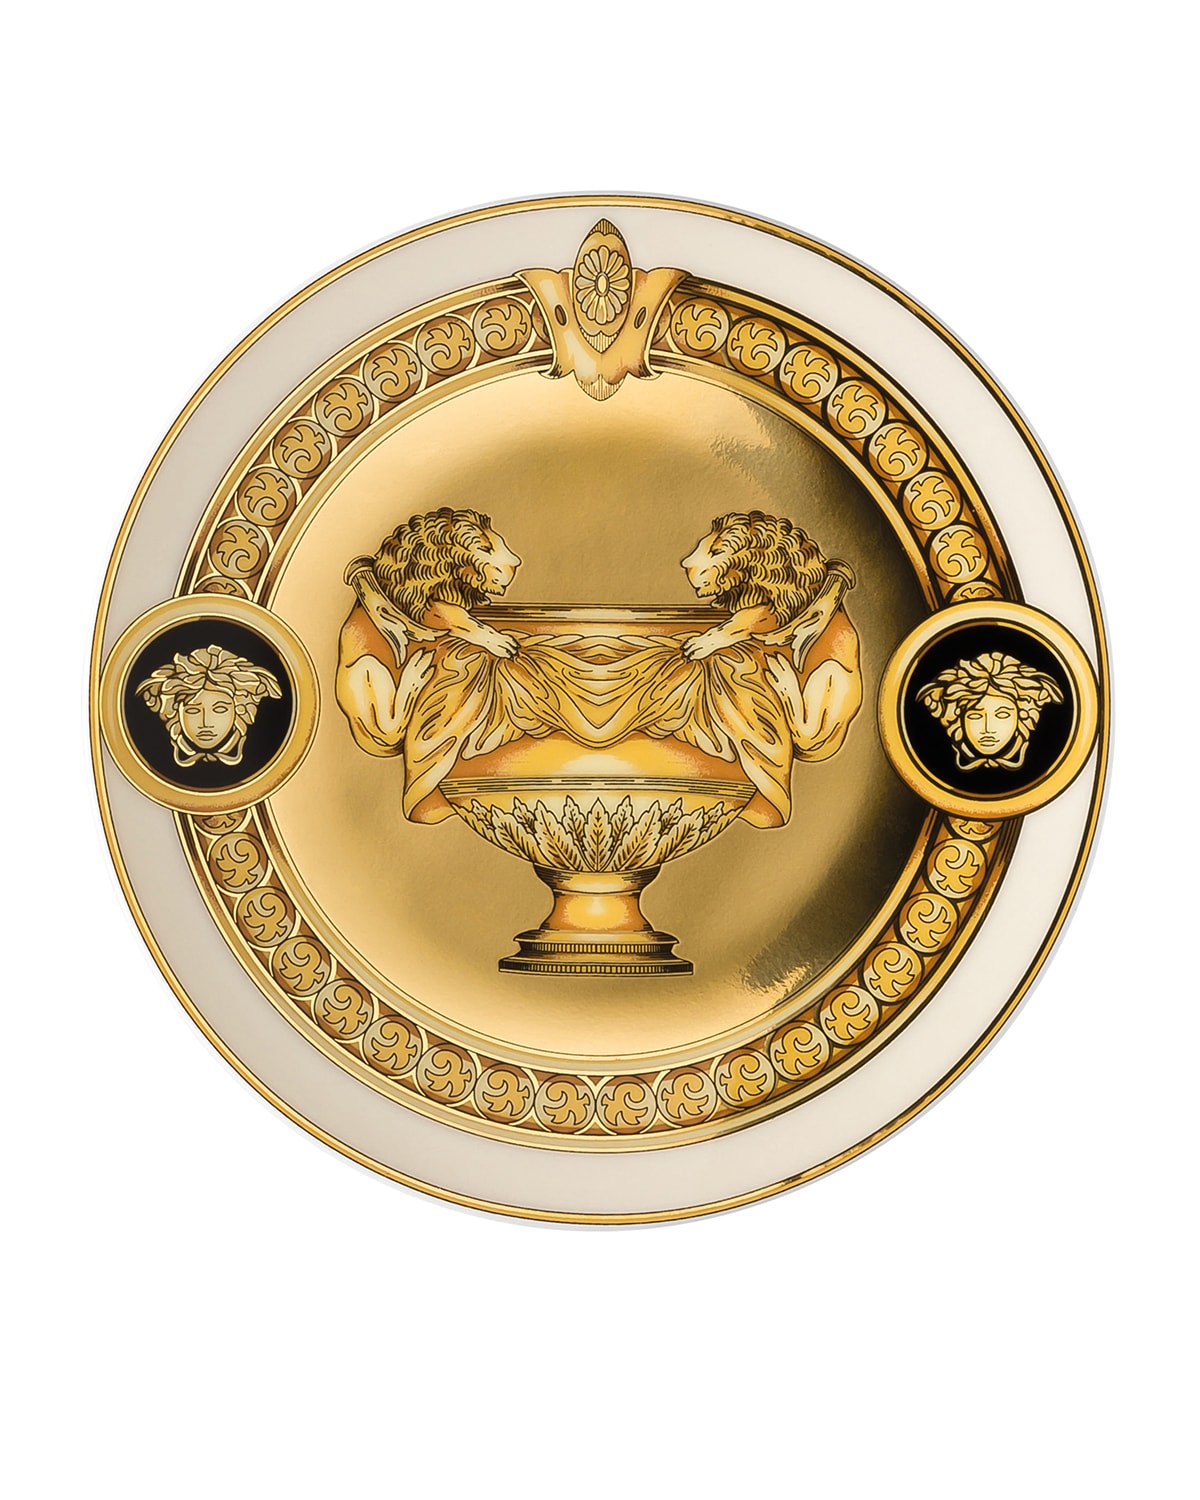 Versace Prestige Gala Plate